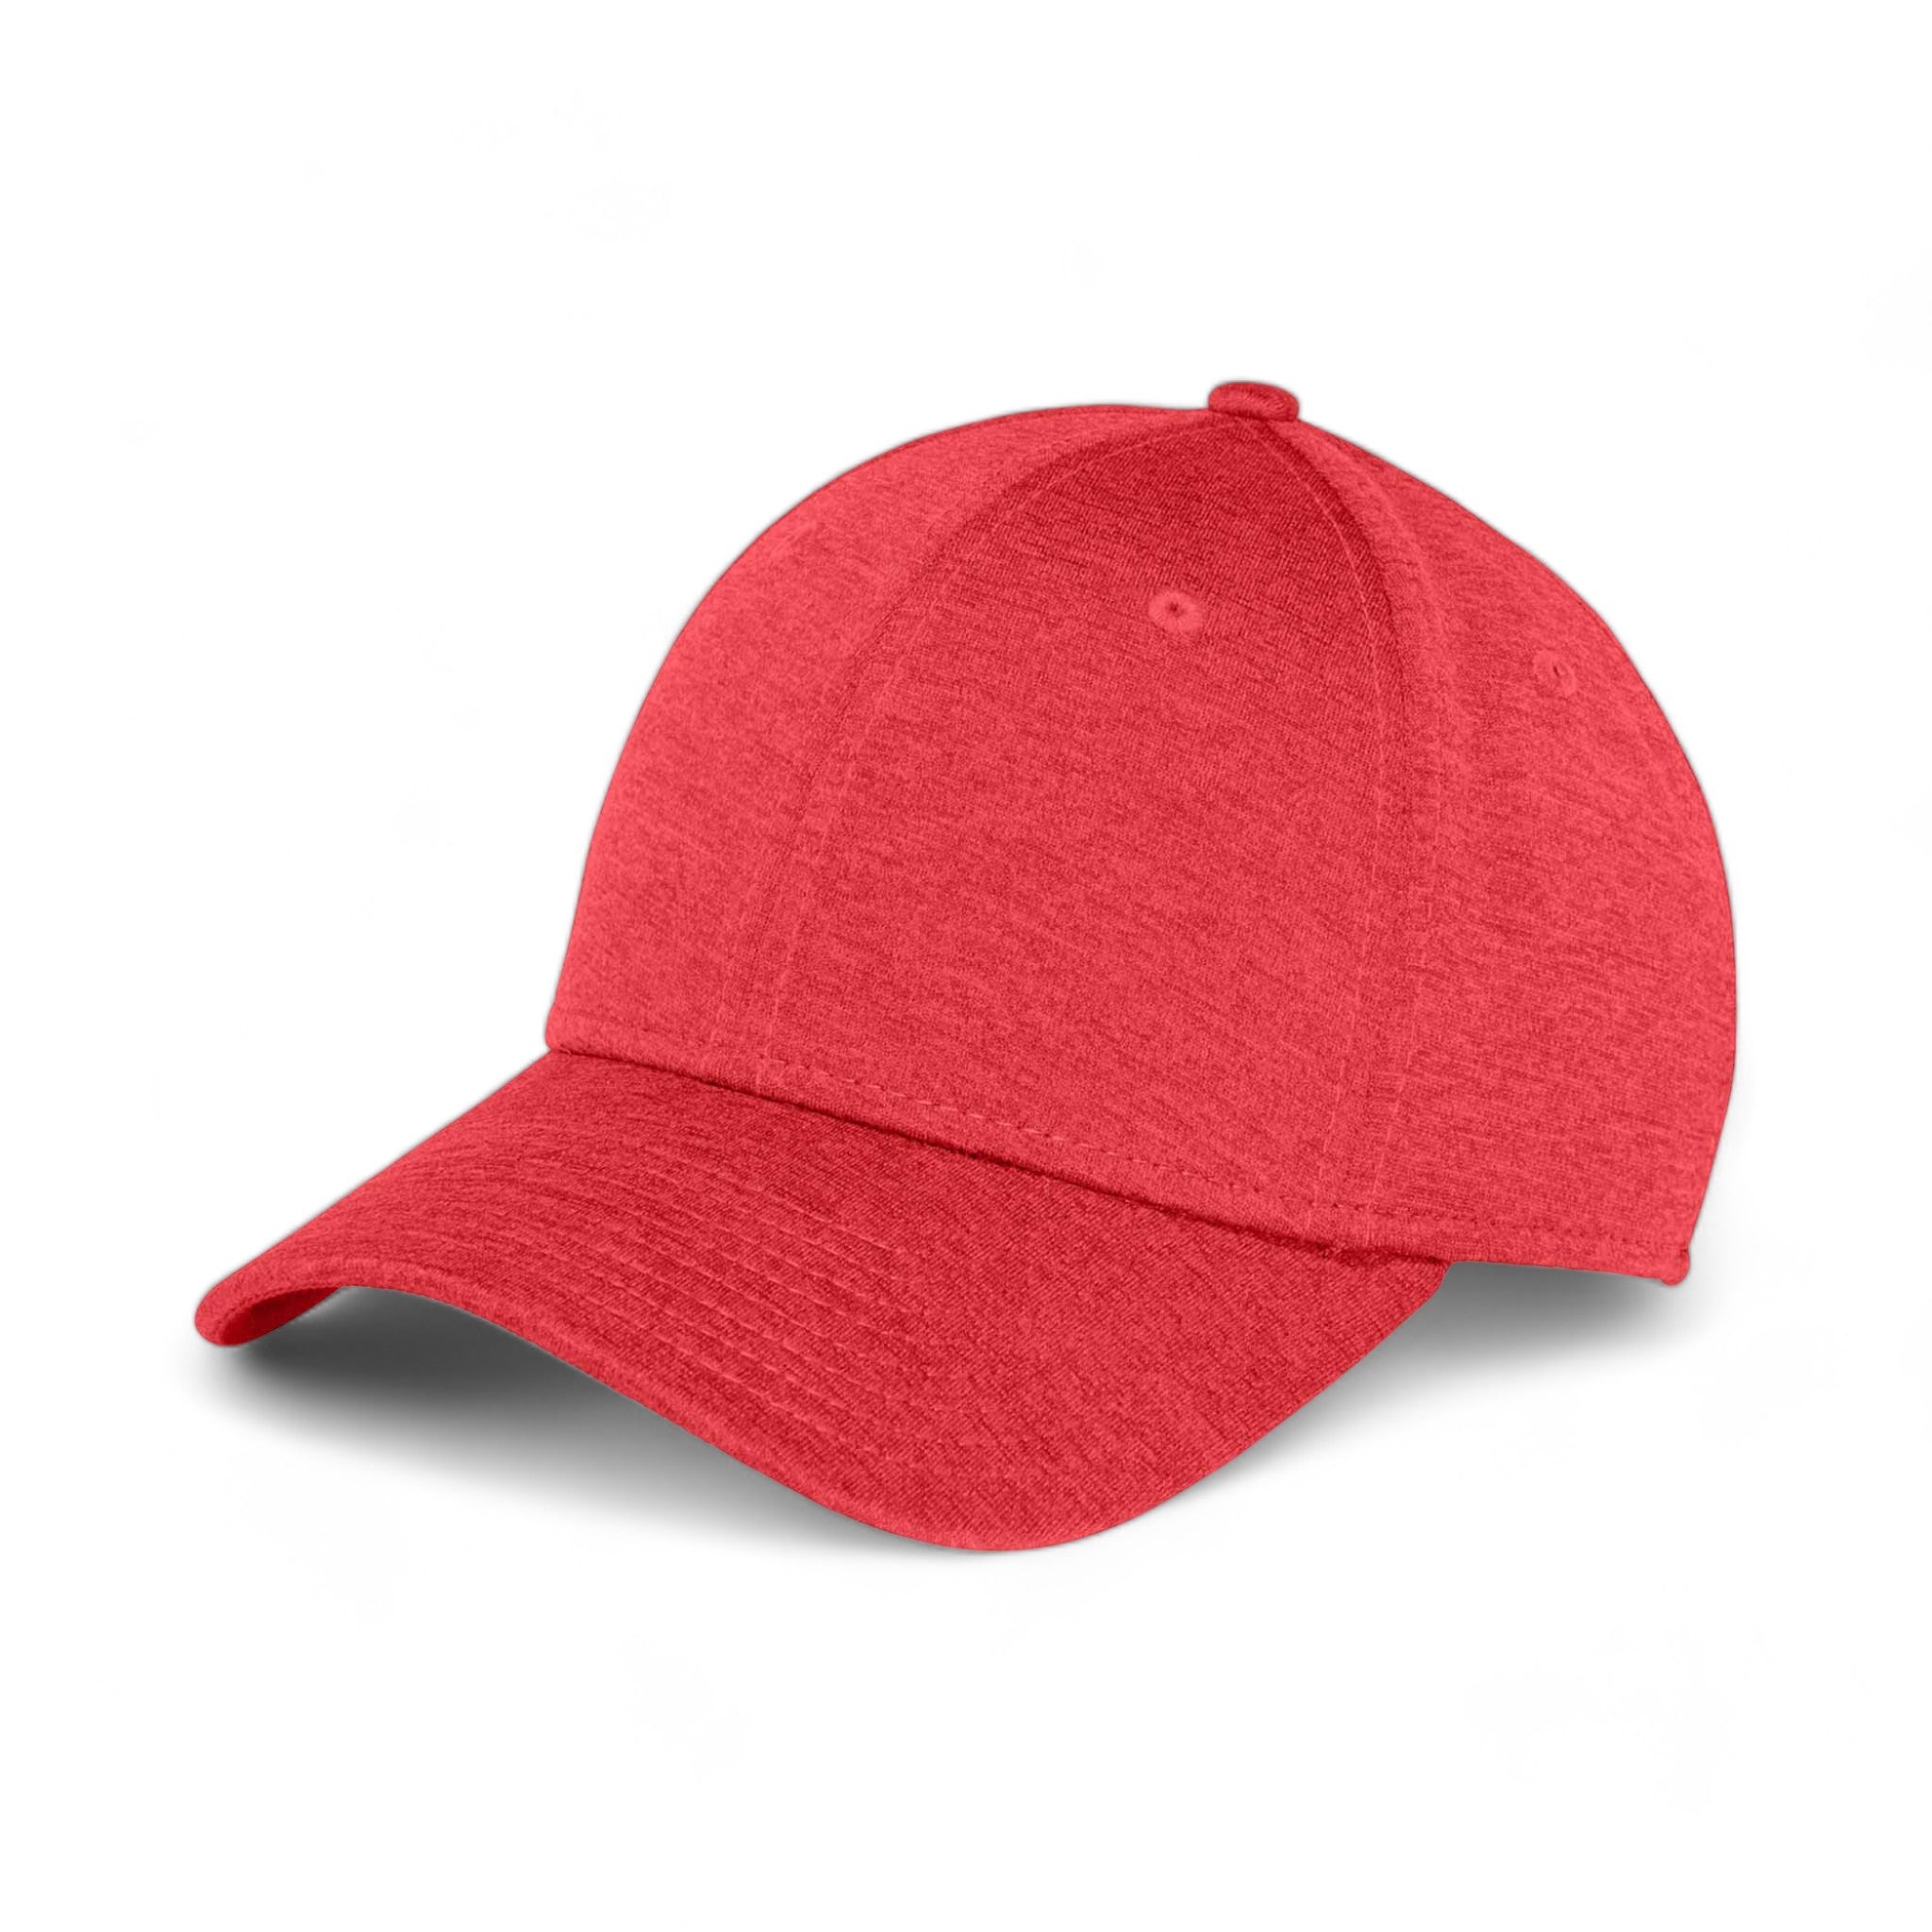 Side view of New Era NE703 custom hat in scarlet shadow heather